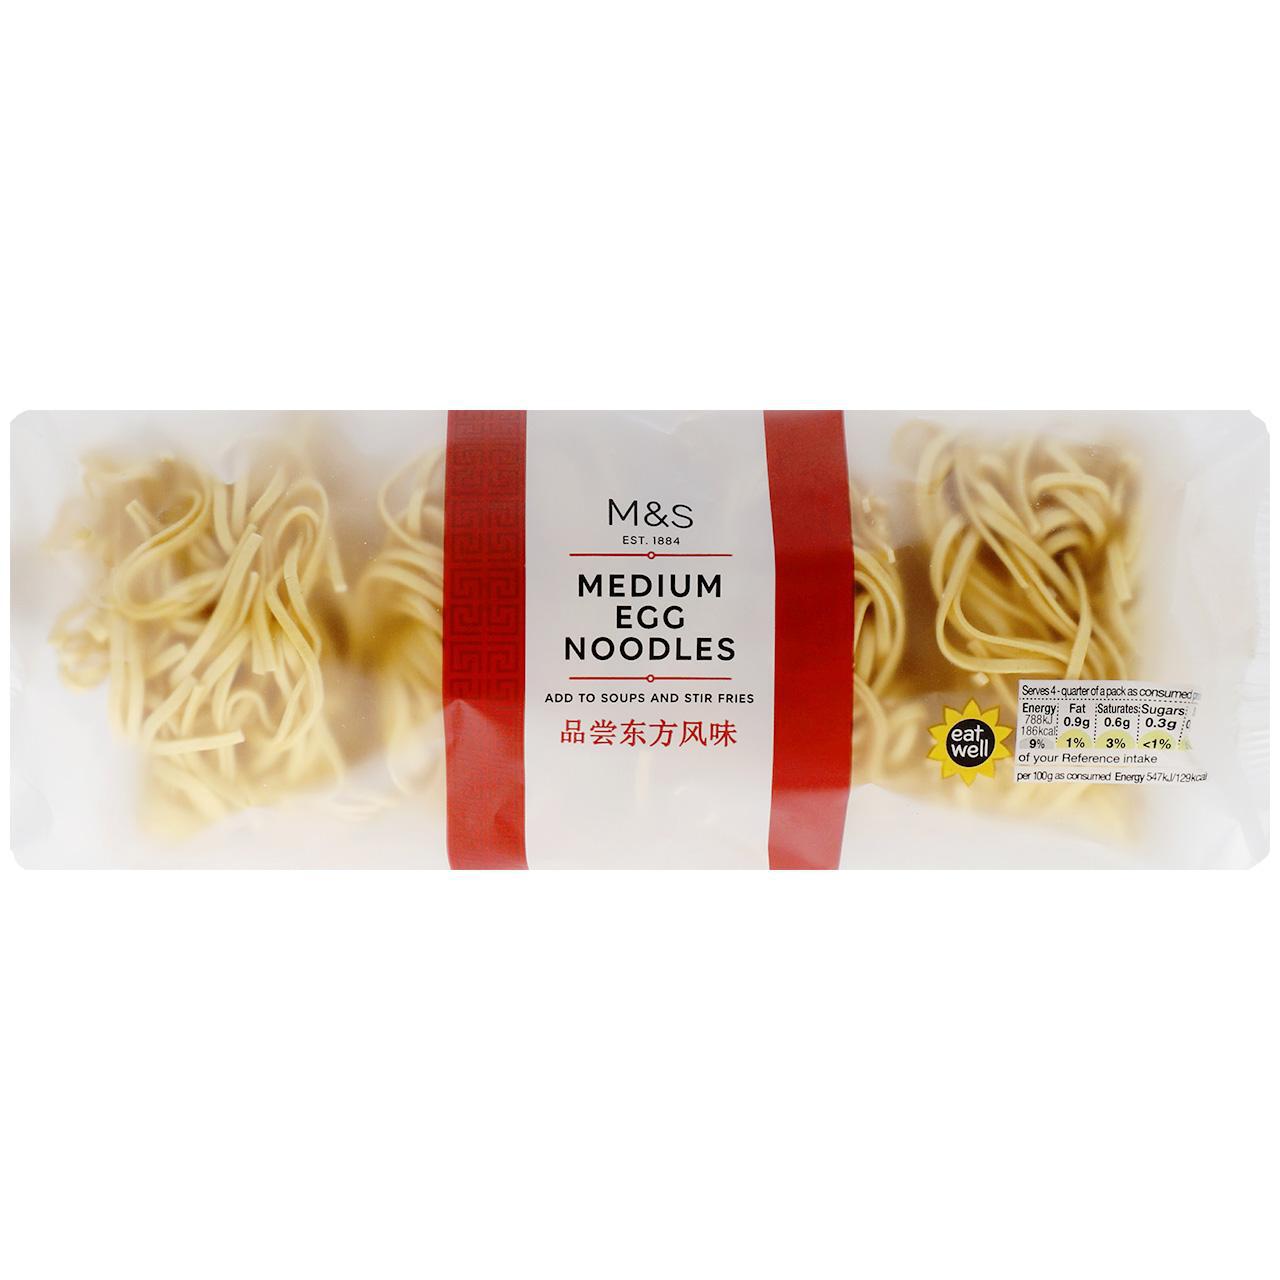 M&S Medium Egg Noodles 250g